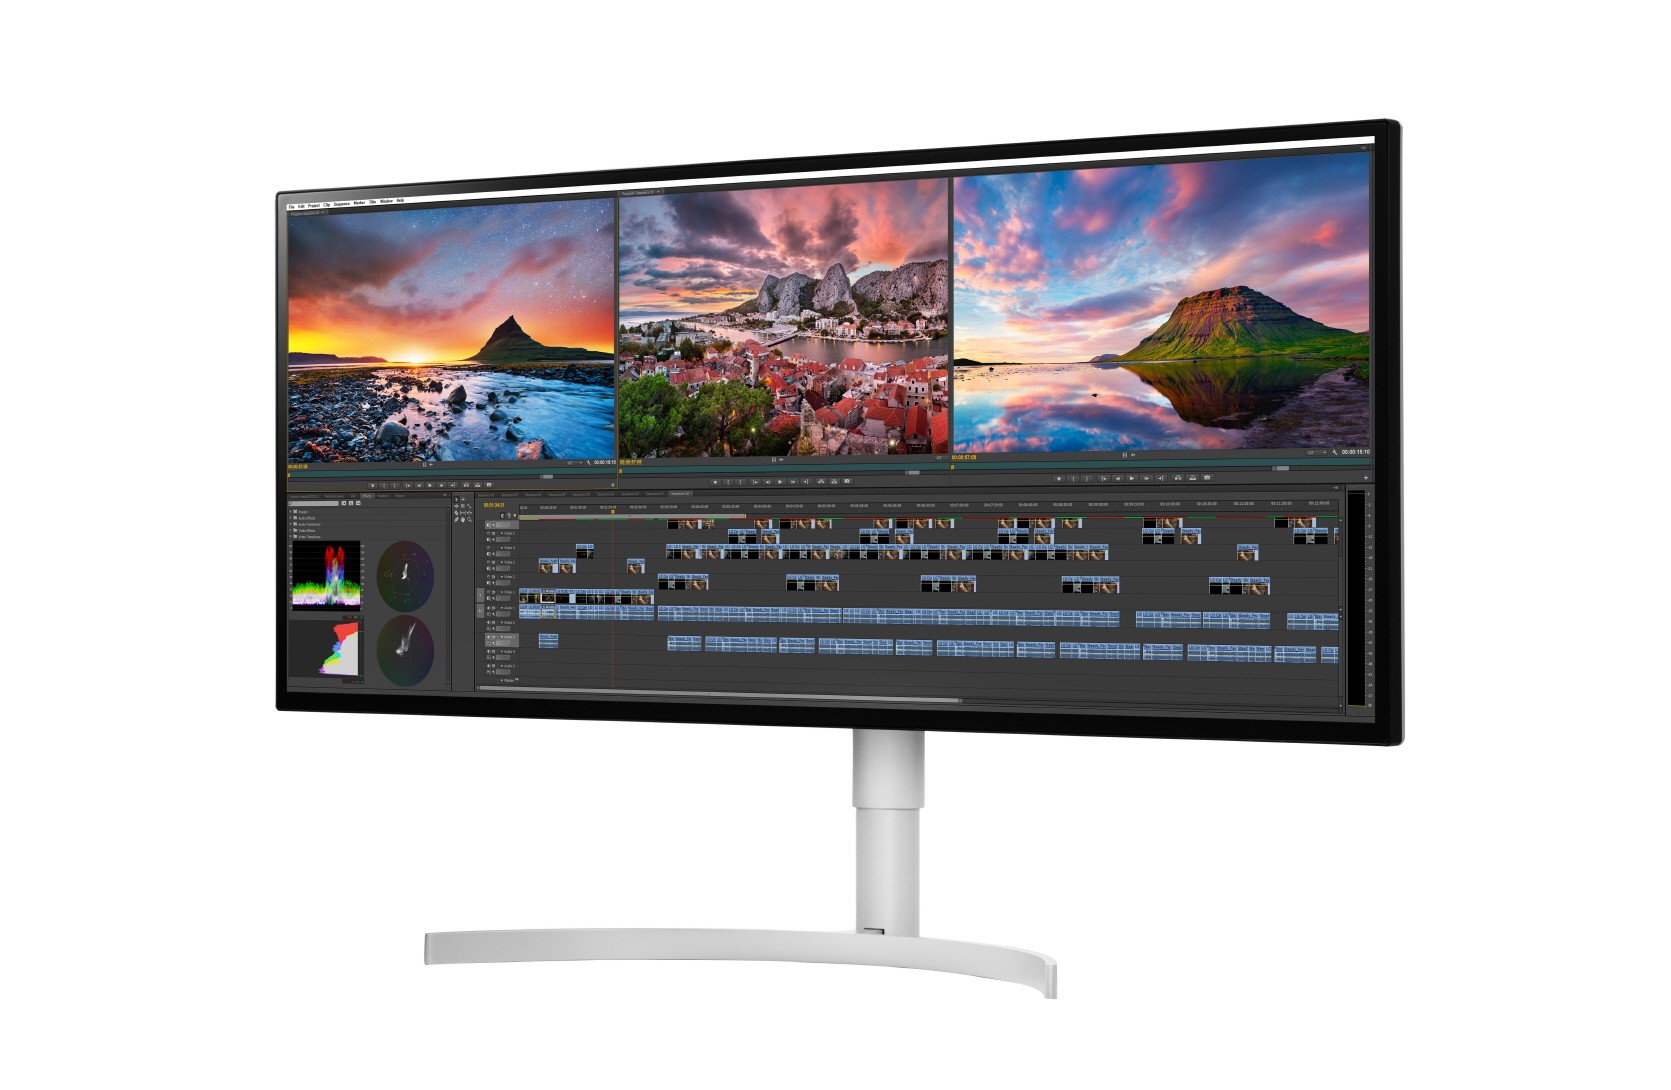 Layar monitor LG ukuran 34 inci UltraWide seri 34WK95U tampil dyngan resolusi 5K (5120 x 2160 piksel)